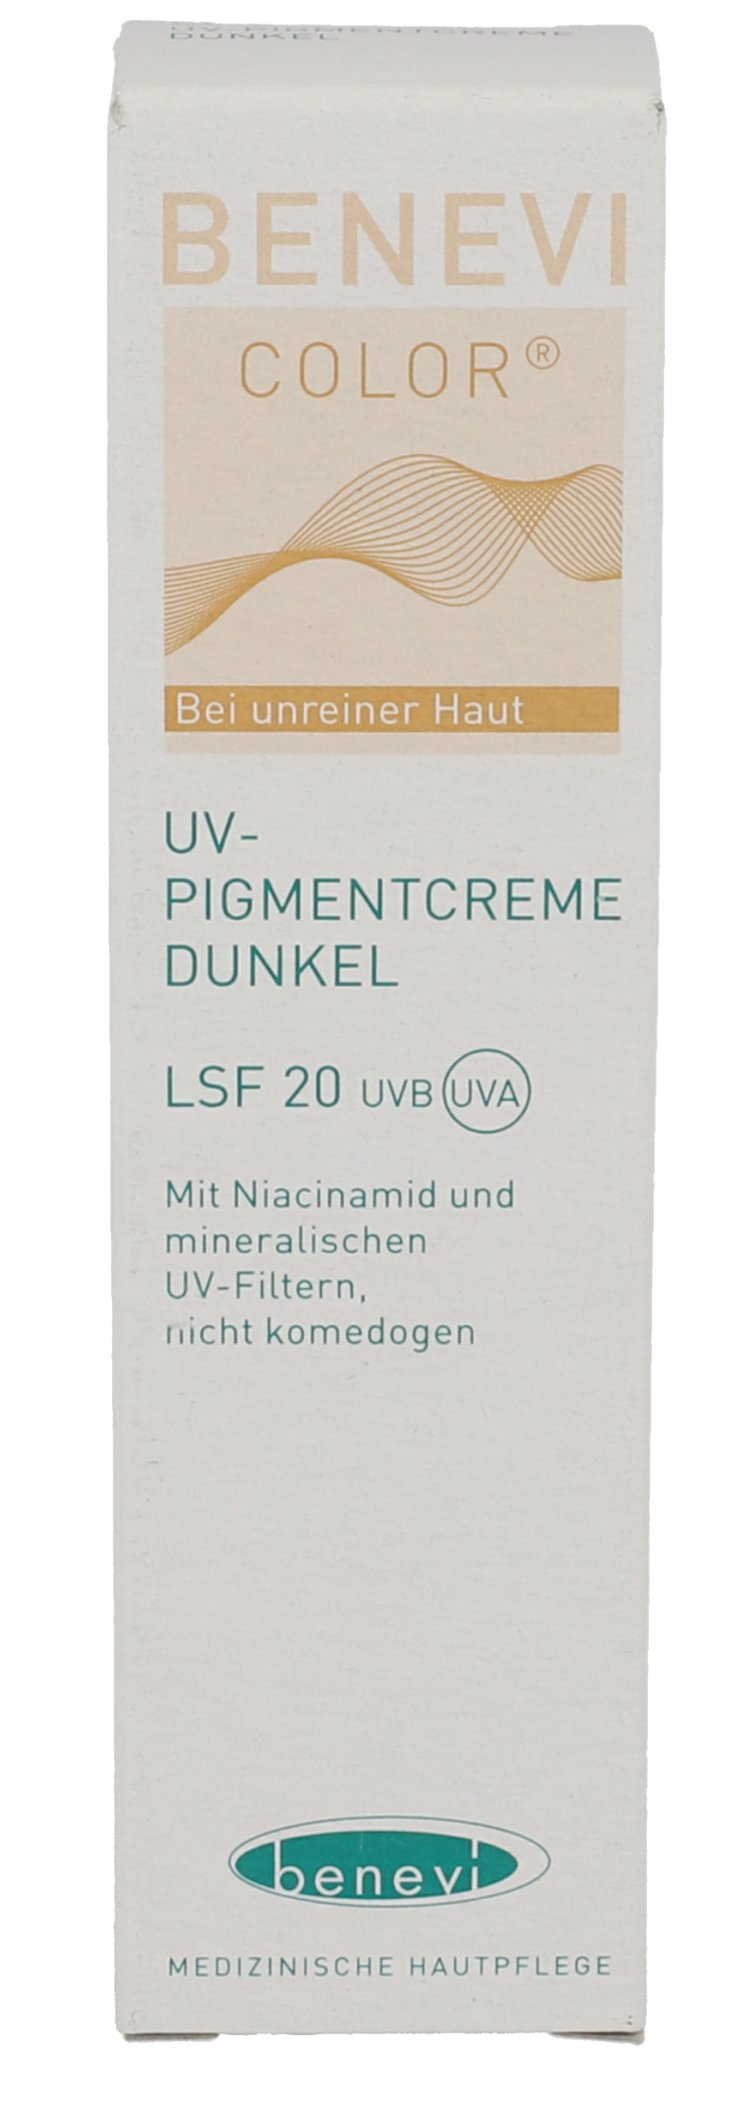 BENEVI Color UV-Pigmentcreme dunkel LSF 20